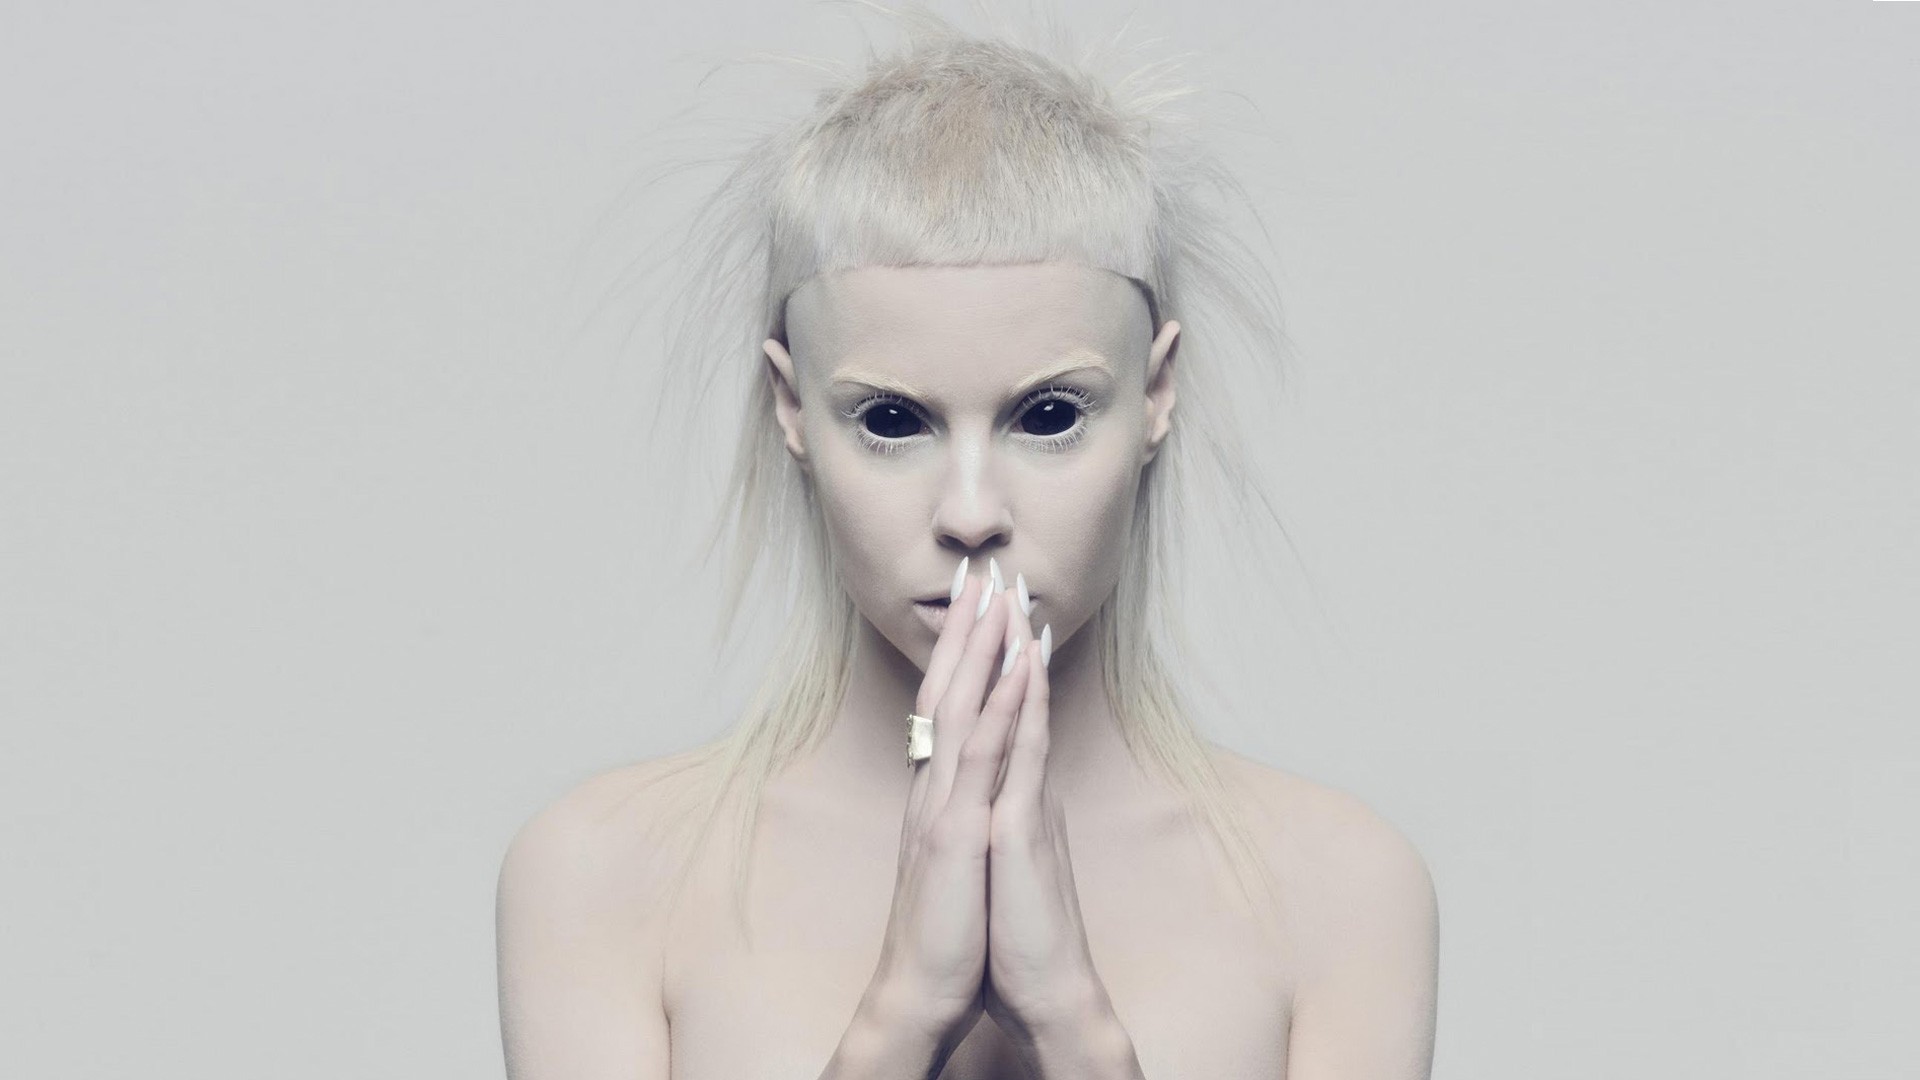 People 1920x1080 Die Antwoord zef Yolandi Visser white hair black sclera singer women implied nude folded hands